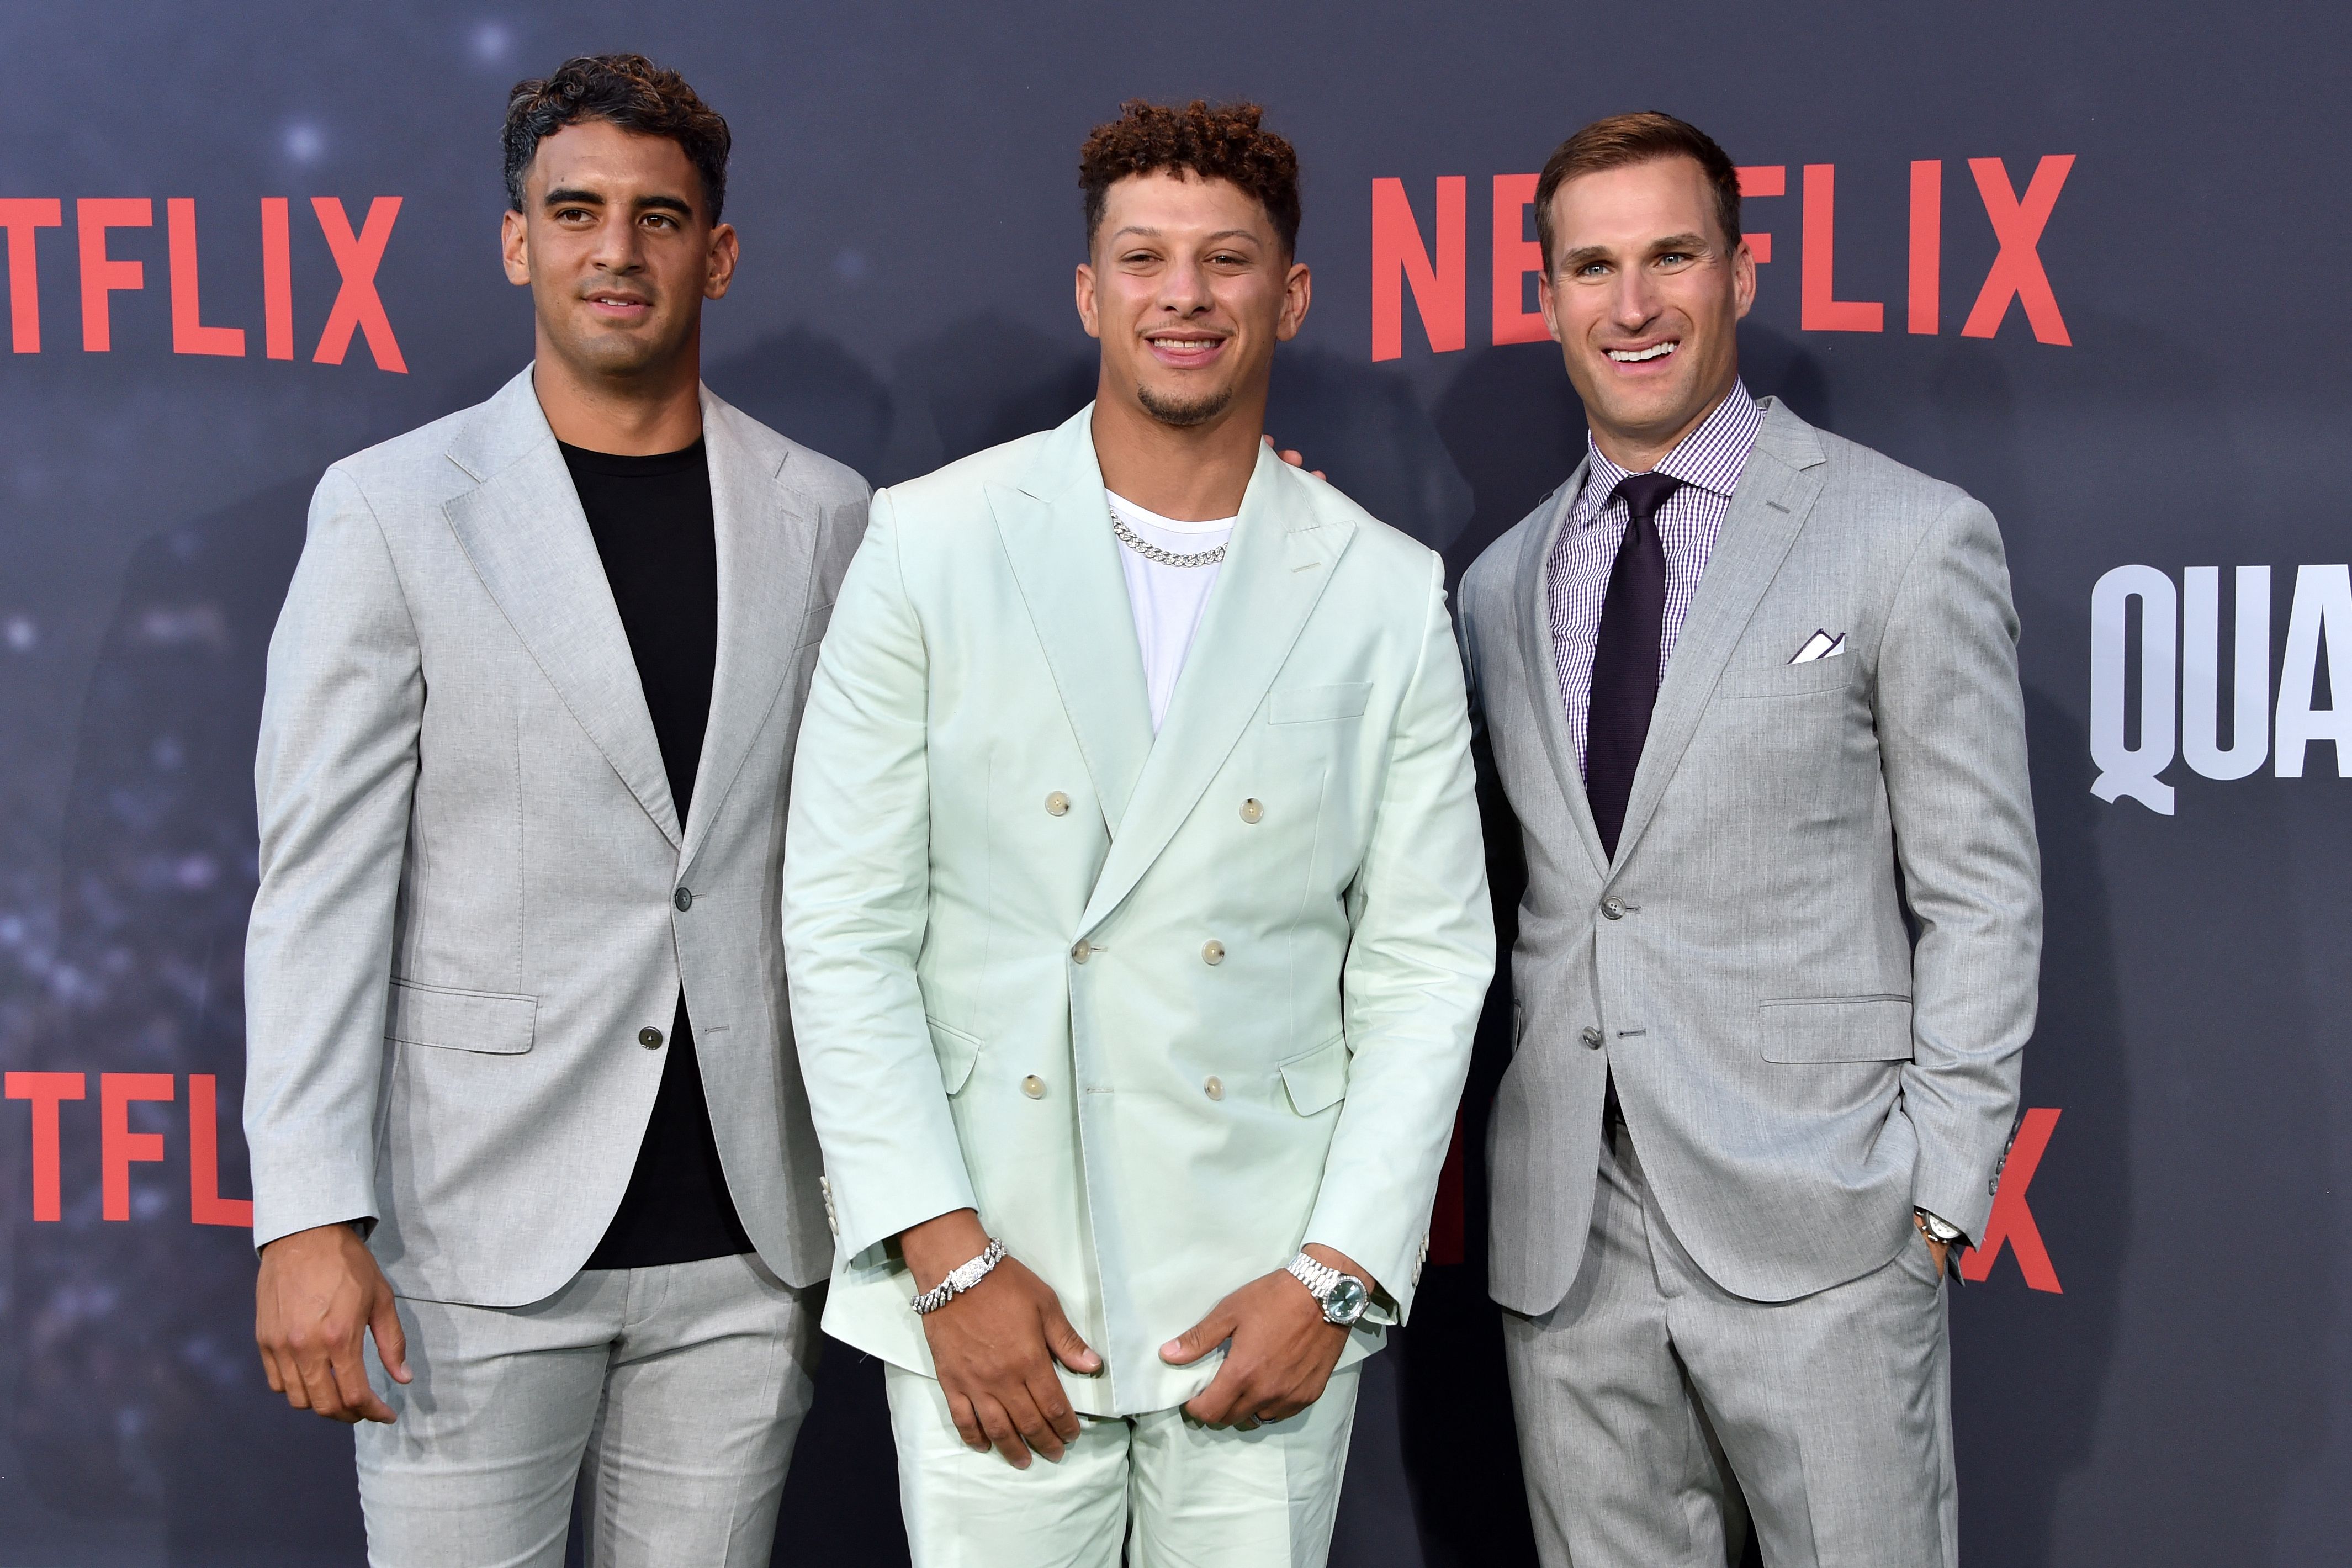 3 players we want next in Season 2 of Netflix Quarterback series